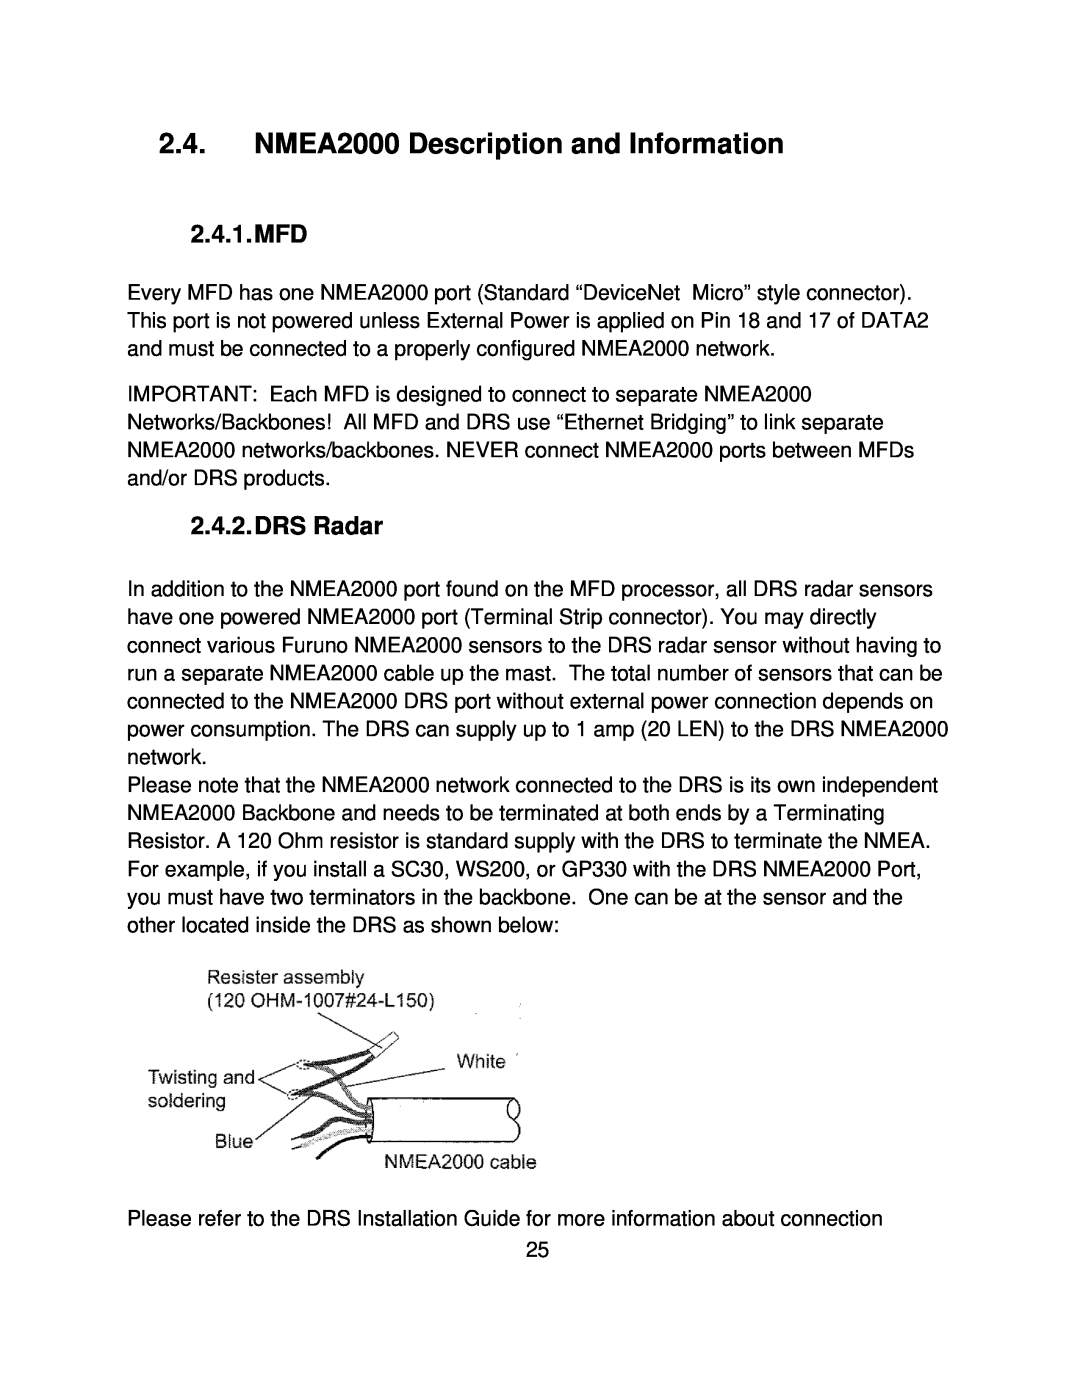 Furuno MFD8/12/BB manual NMEA2000 Description and Information, 2.4.1.MFD, DRS Radar 